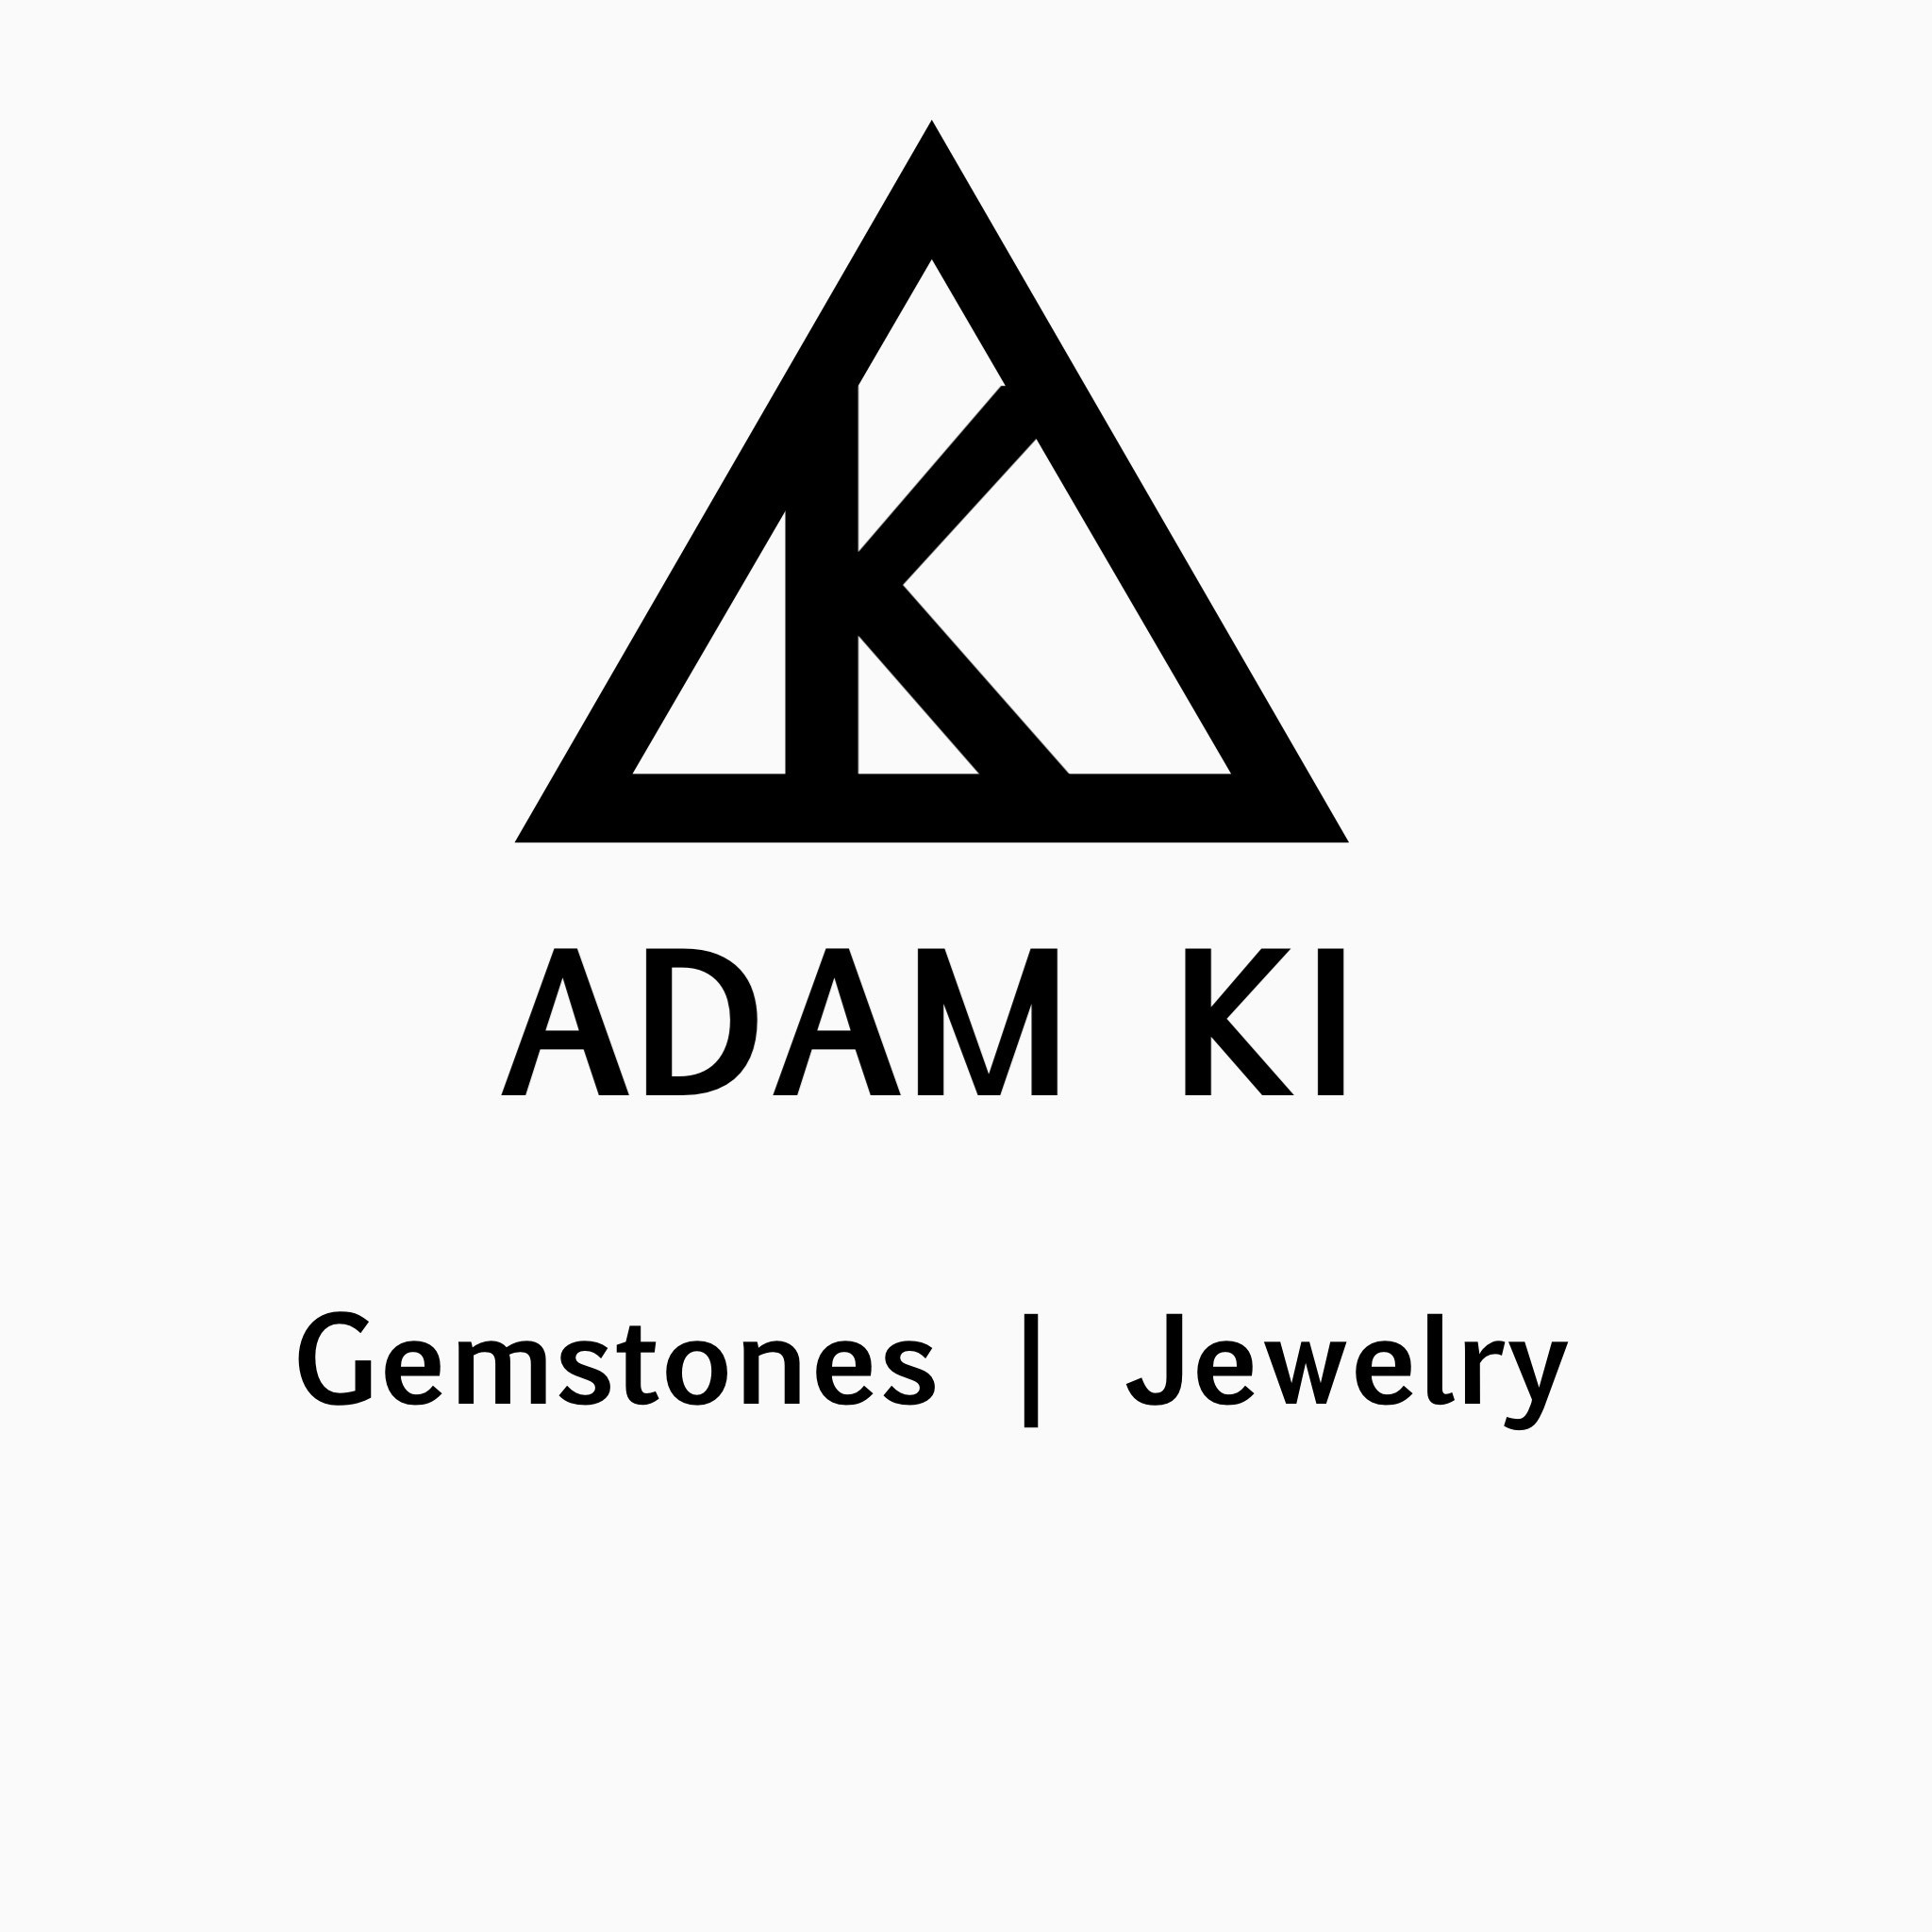 Adam Ki